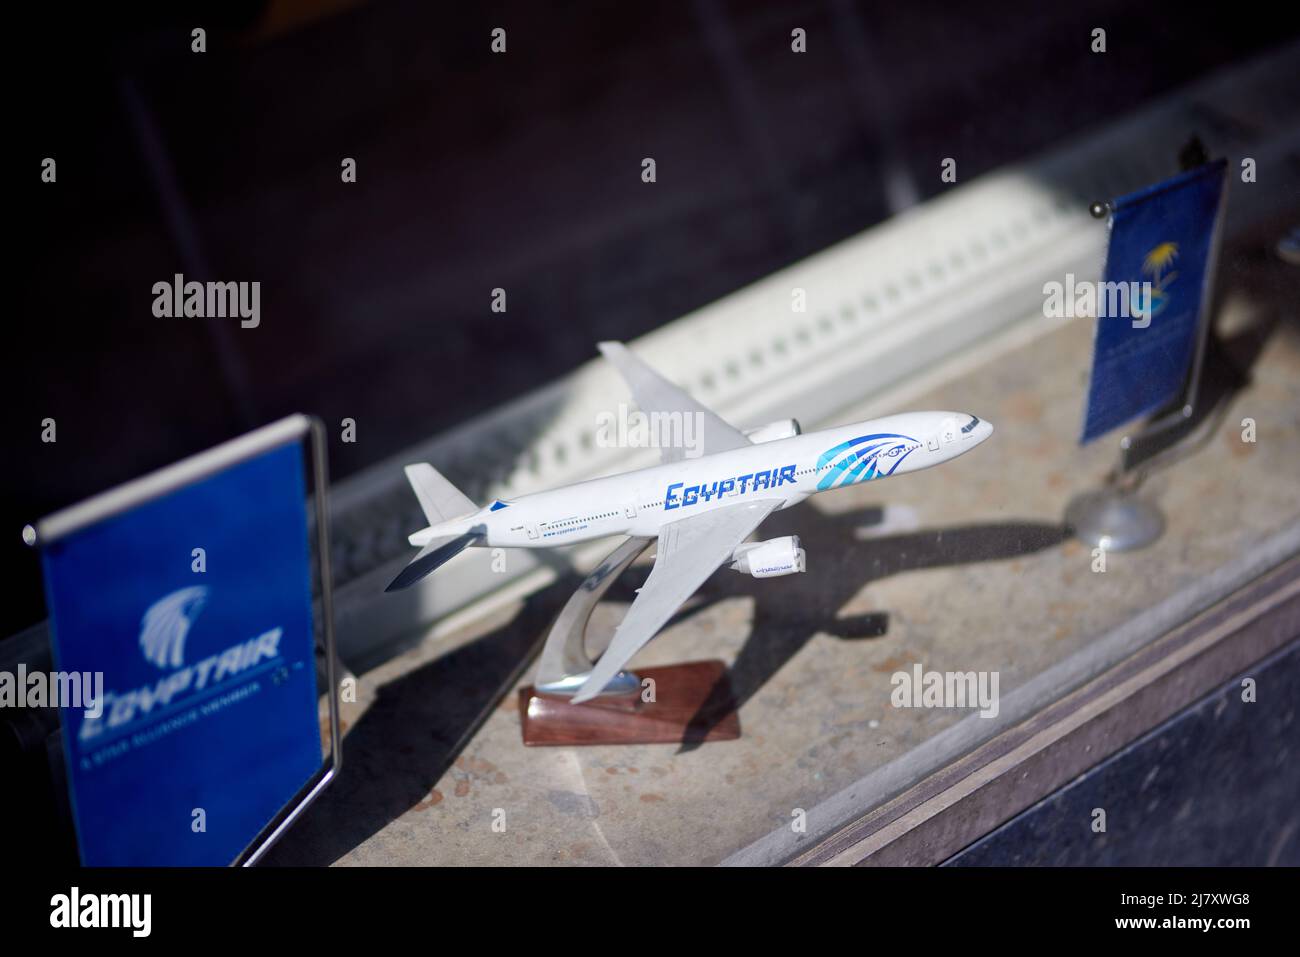 Egyptair model plane on stand Stock Photo